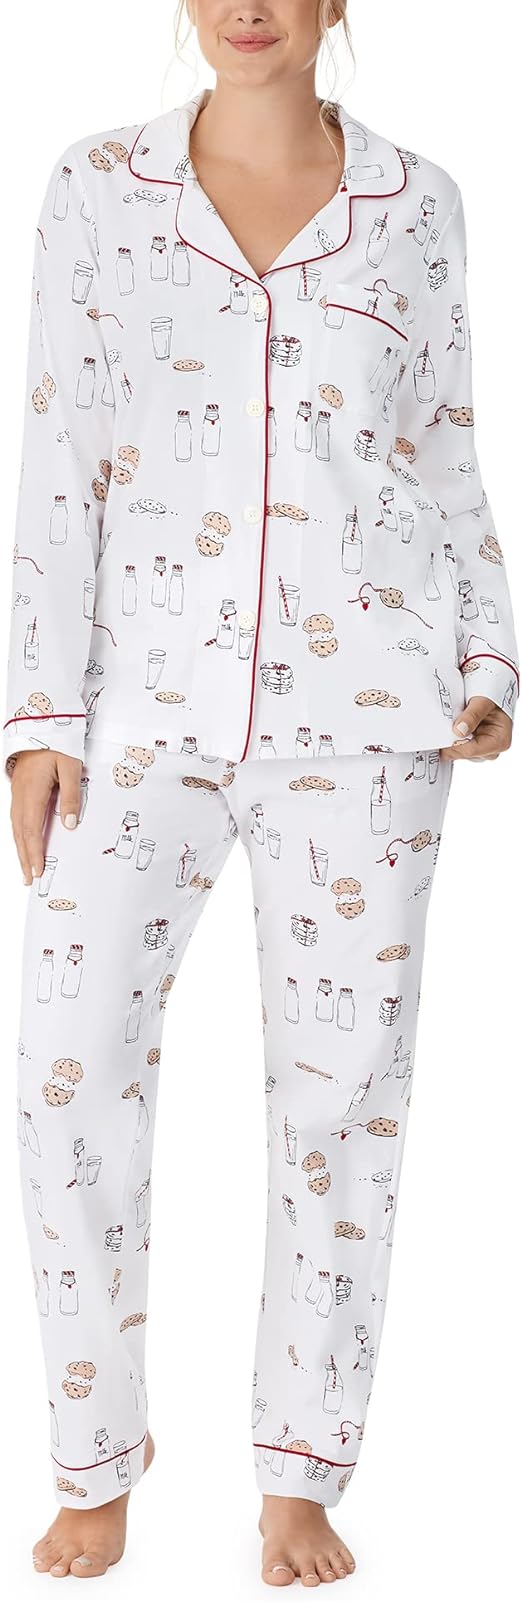 Dumbo Pajama Set for Women